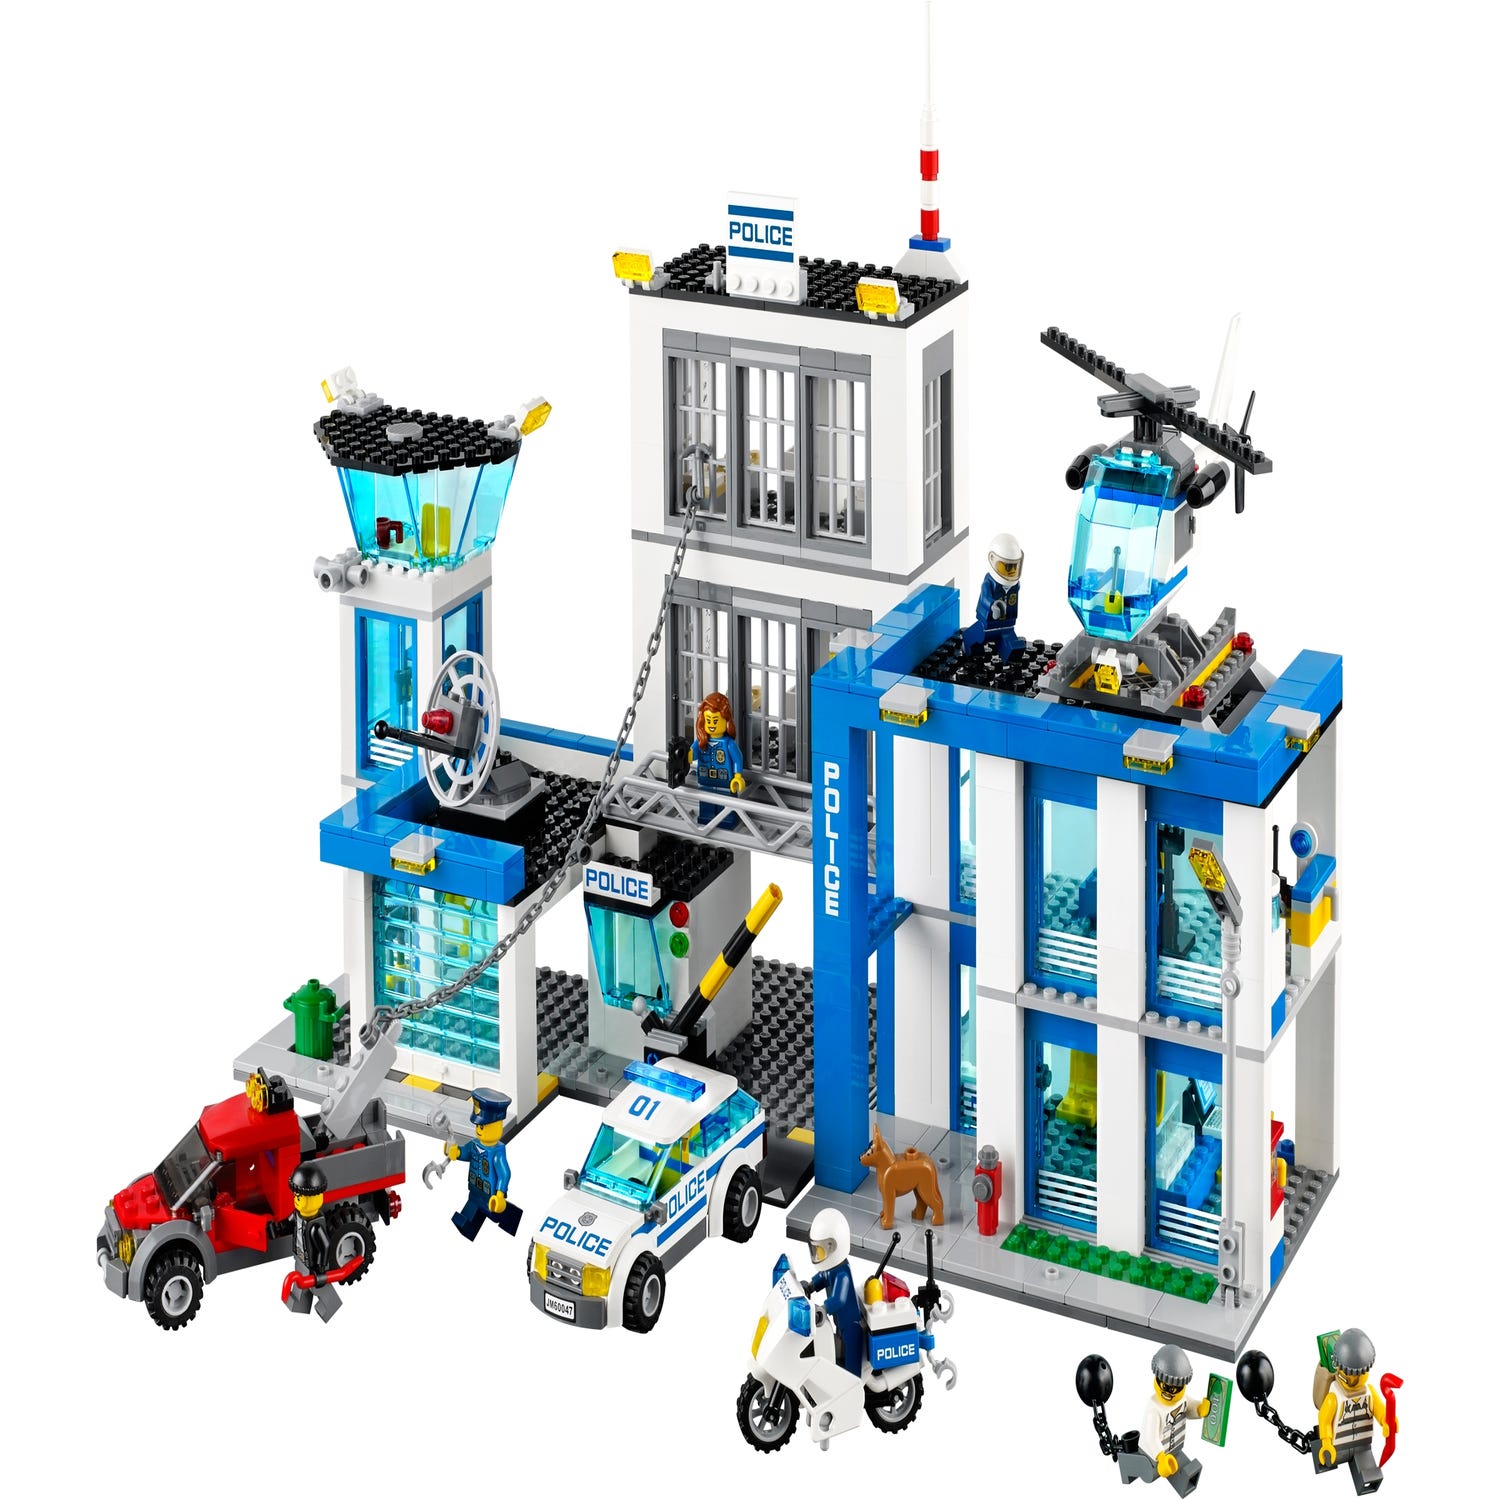 Lego City 60047 Le commissariat de police - Lego | Beebs